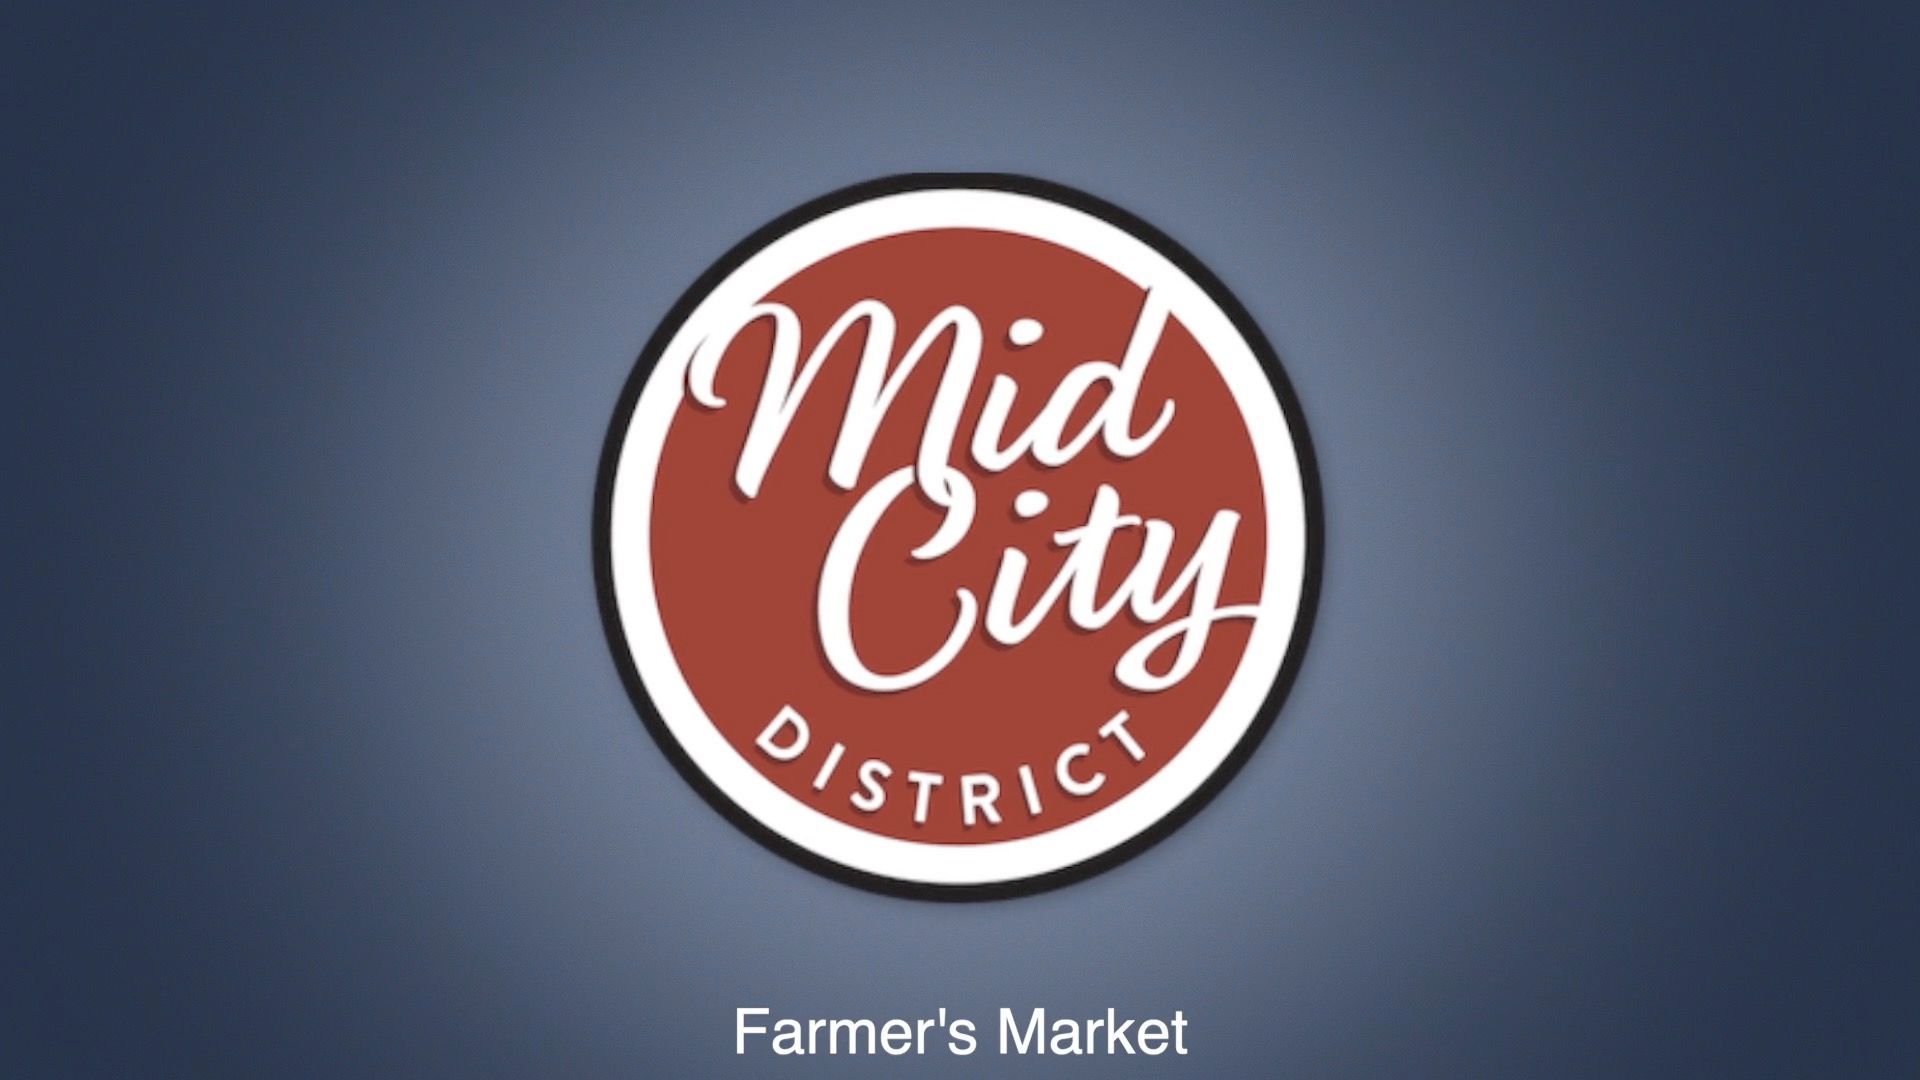 Mid City Farmer's Market